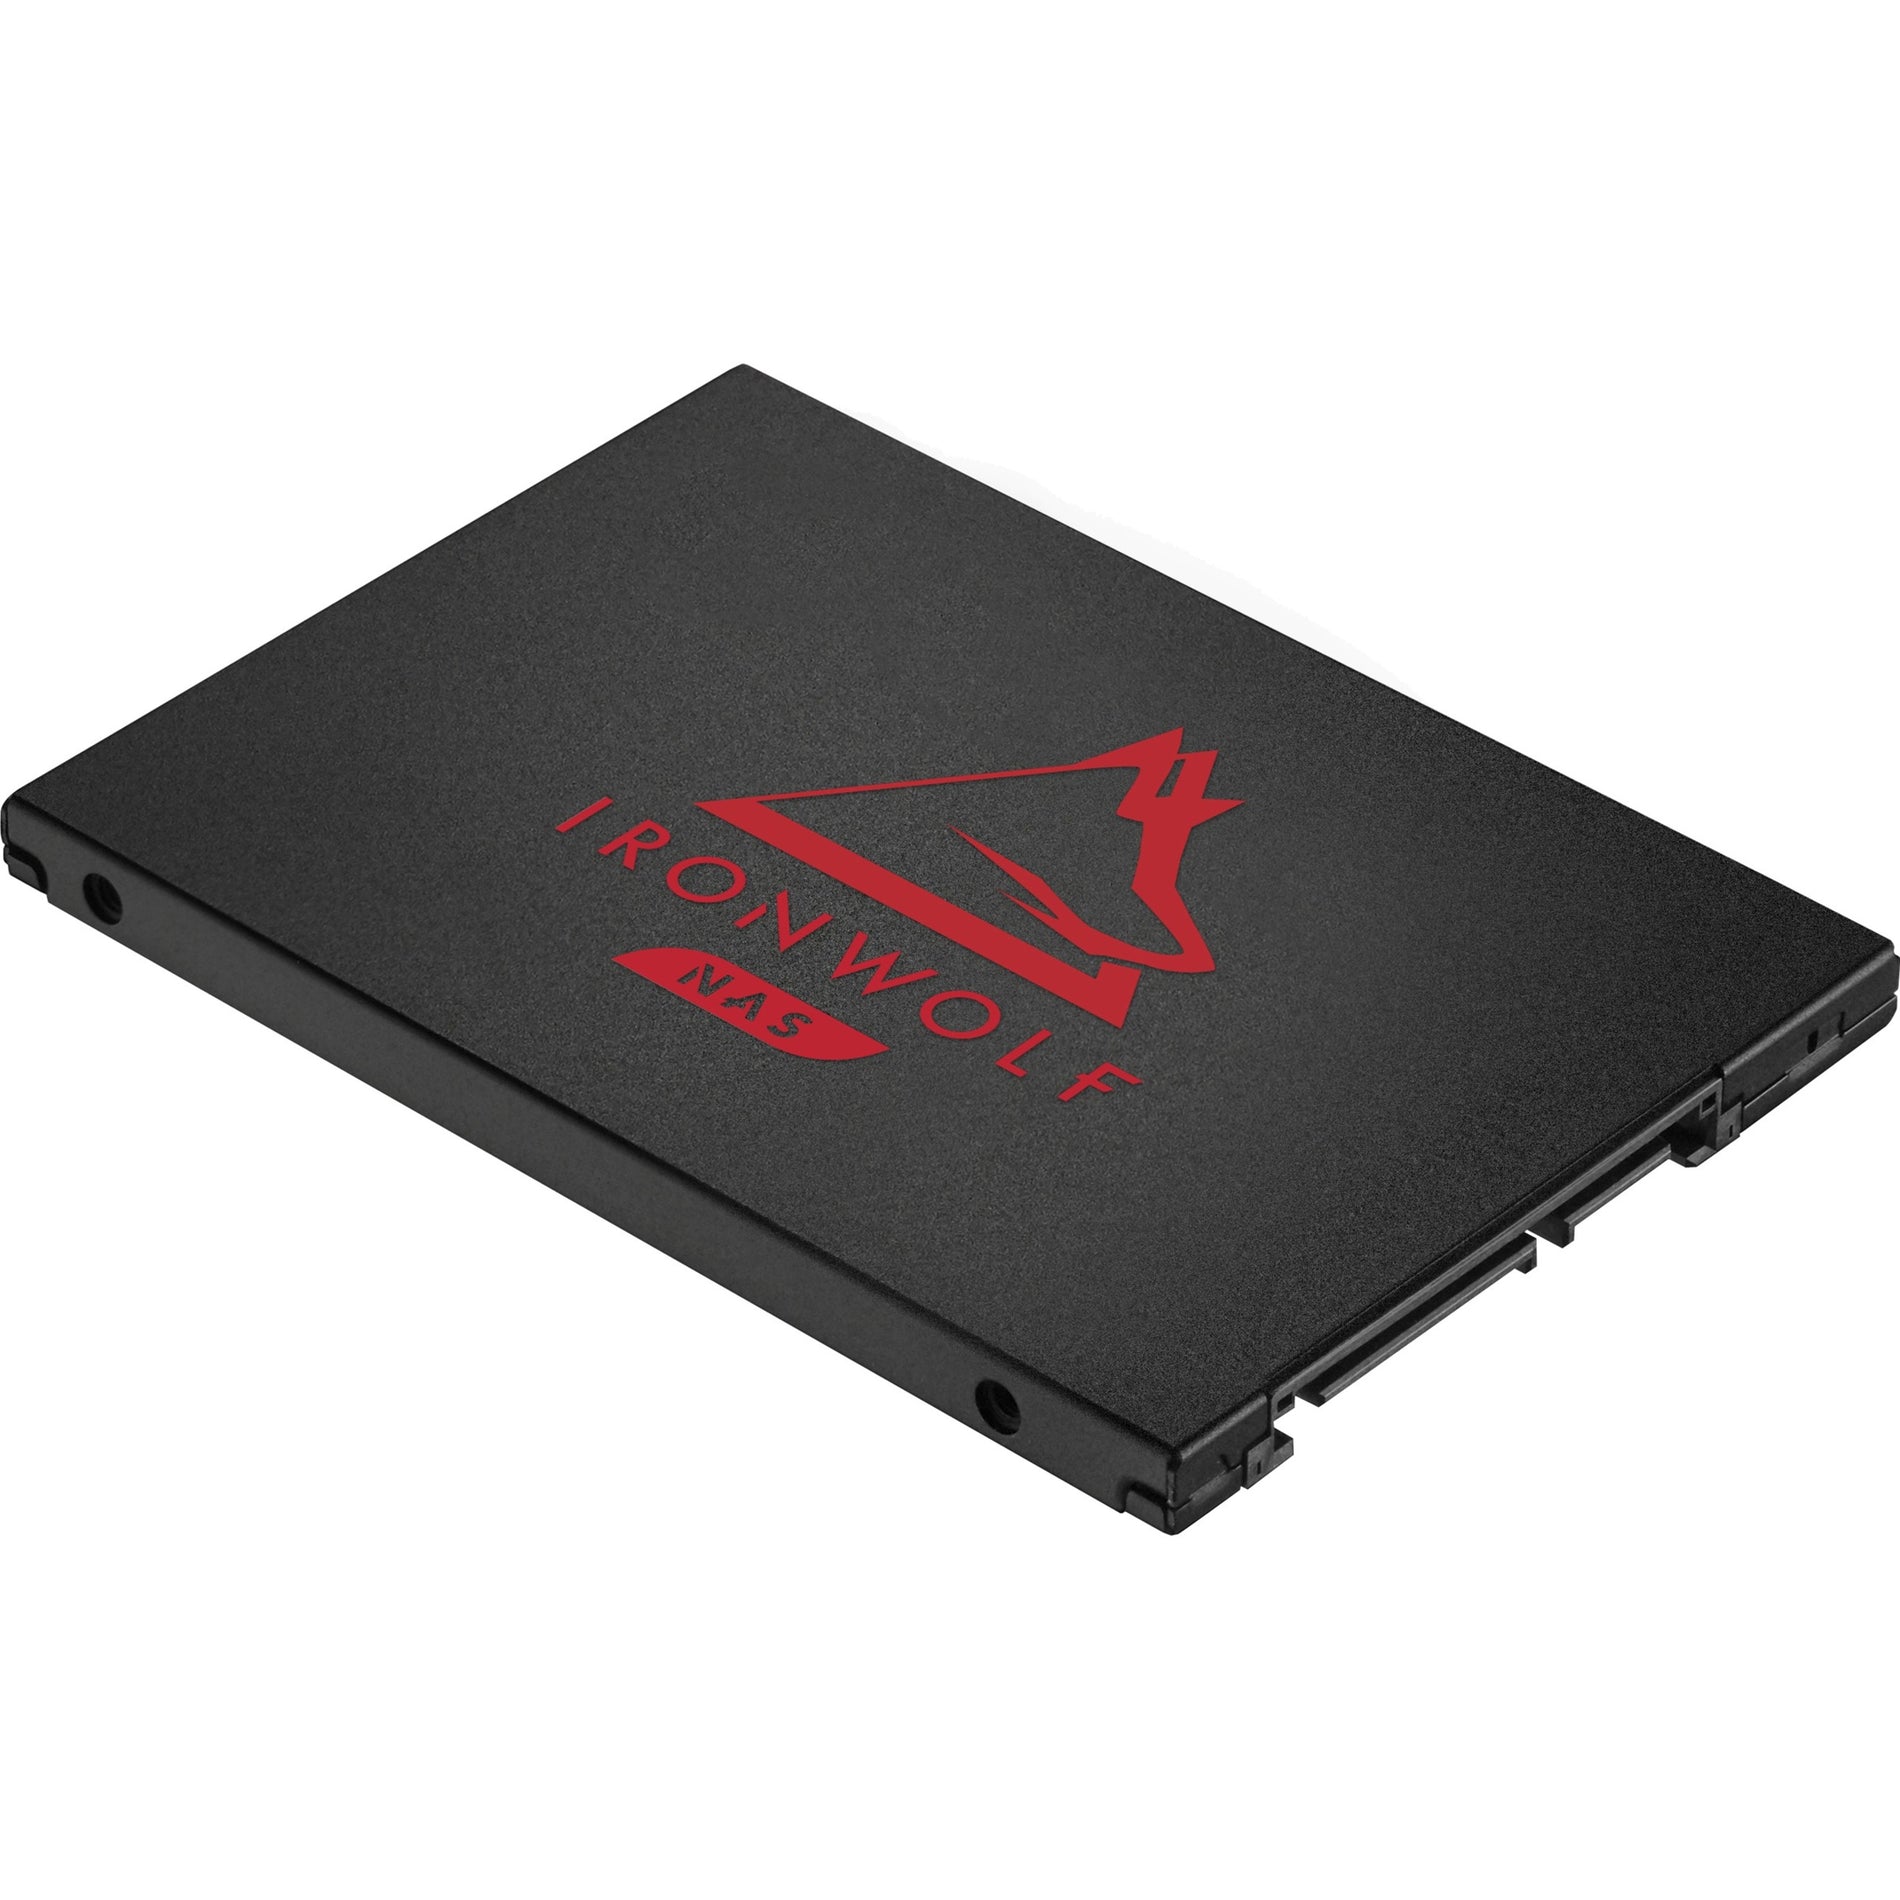 Seagate ZA250NM10002 IronWolf 125 SSD, 250GB SATA Internal Solid State Drive - 2.5" CMR Method